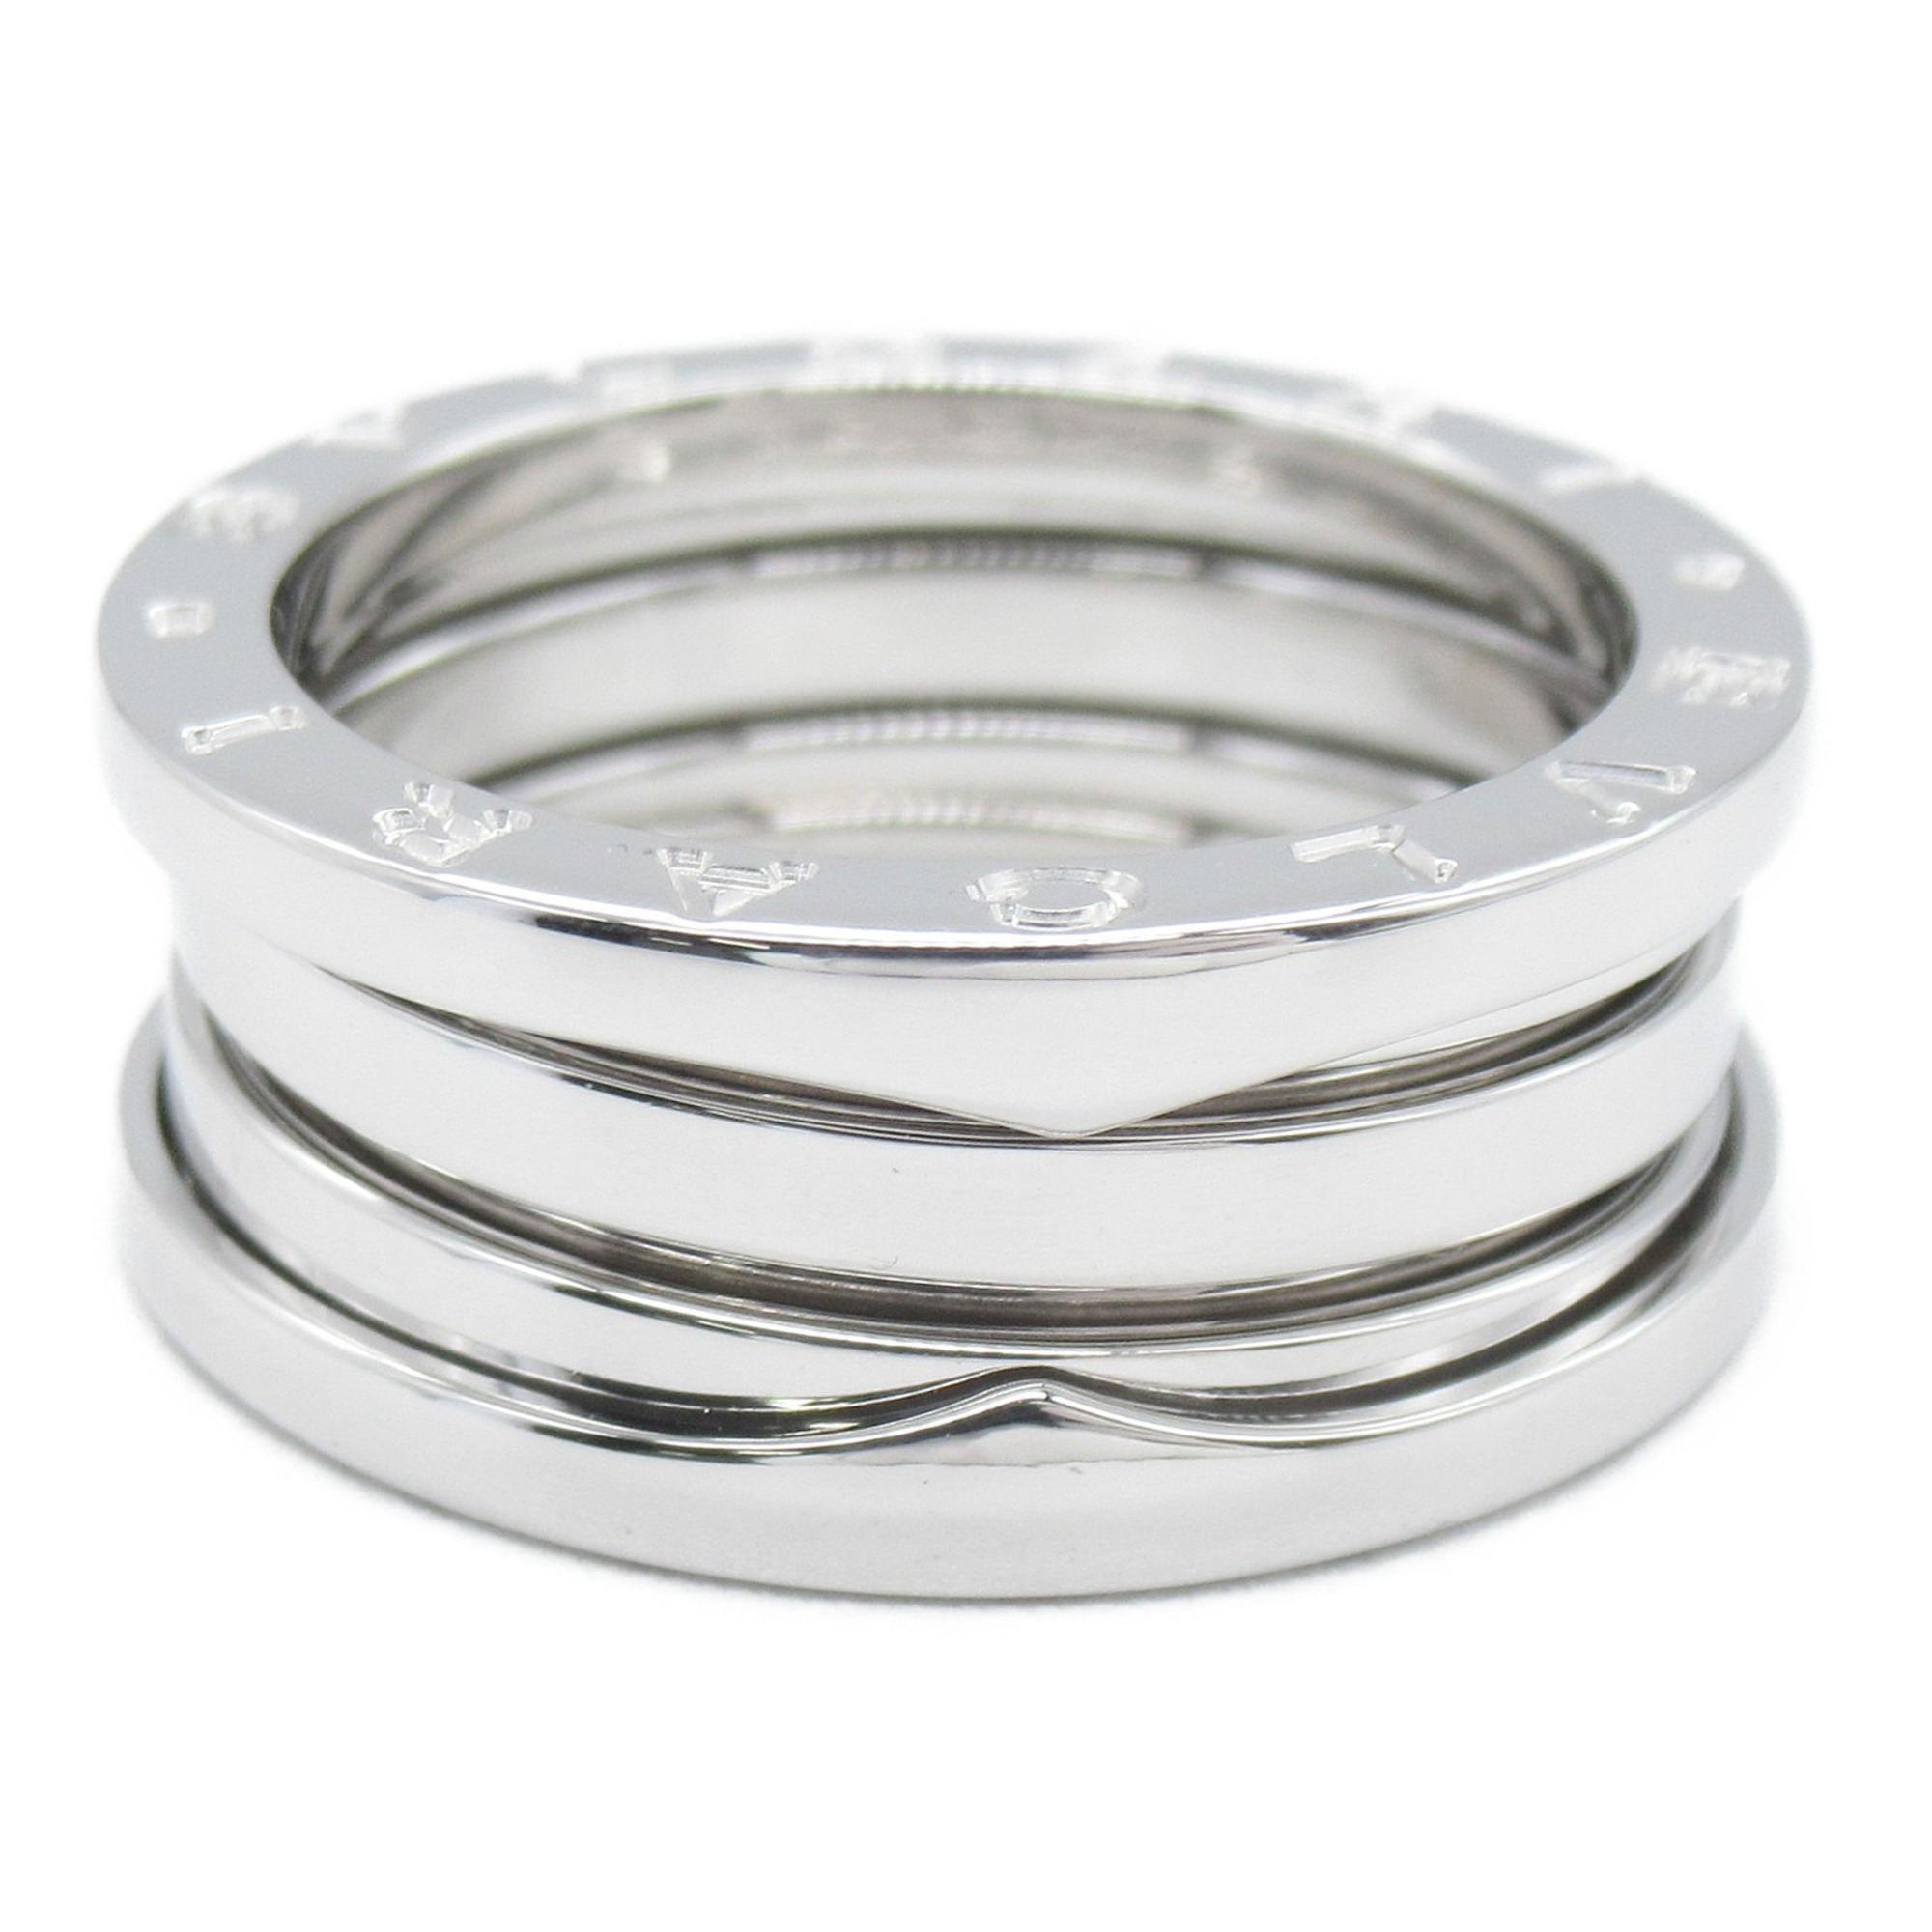 BVLGARI B-zero1 B-zero one ring S size Ring Silver  K18WG(WhiteGold) Silver